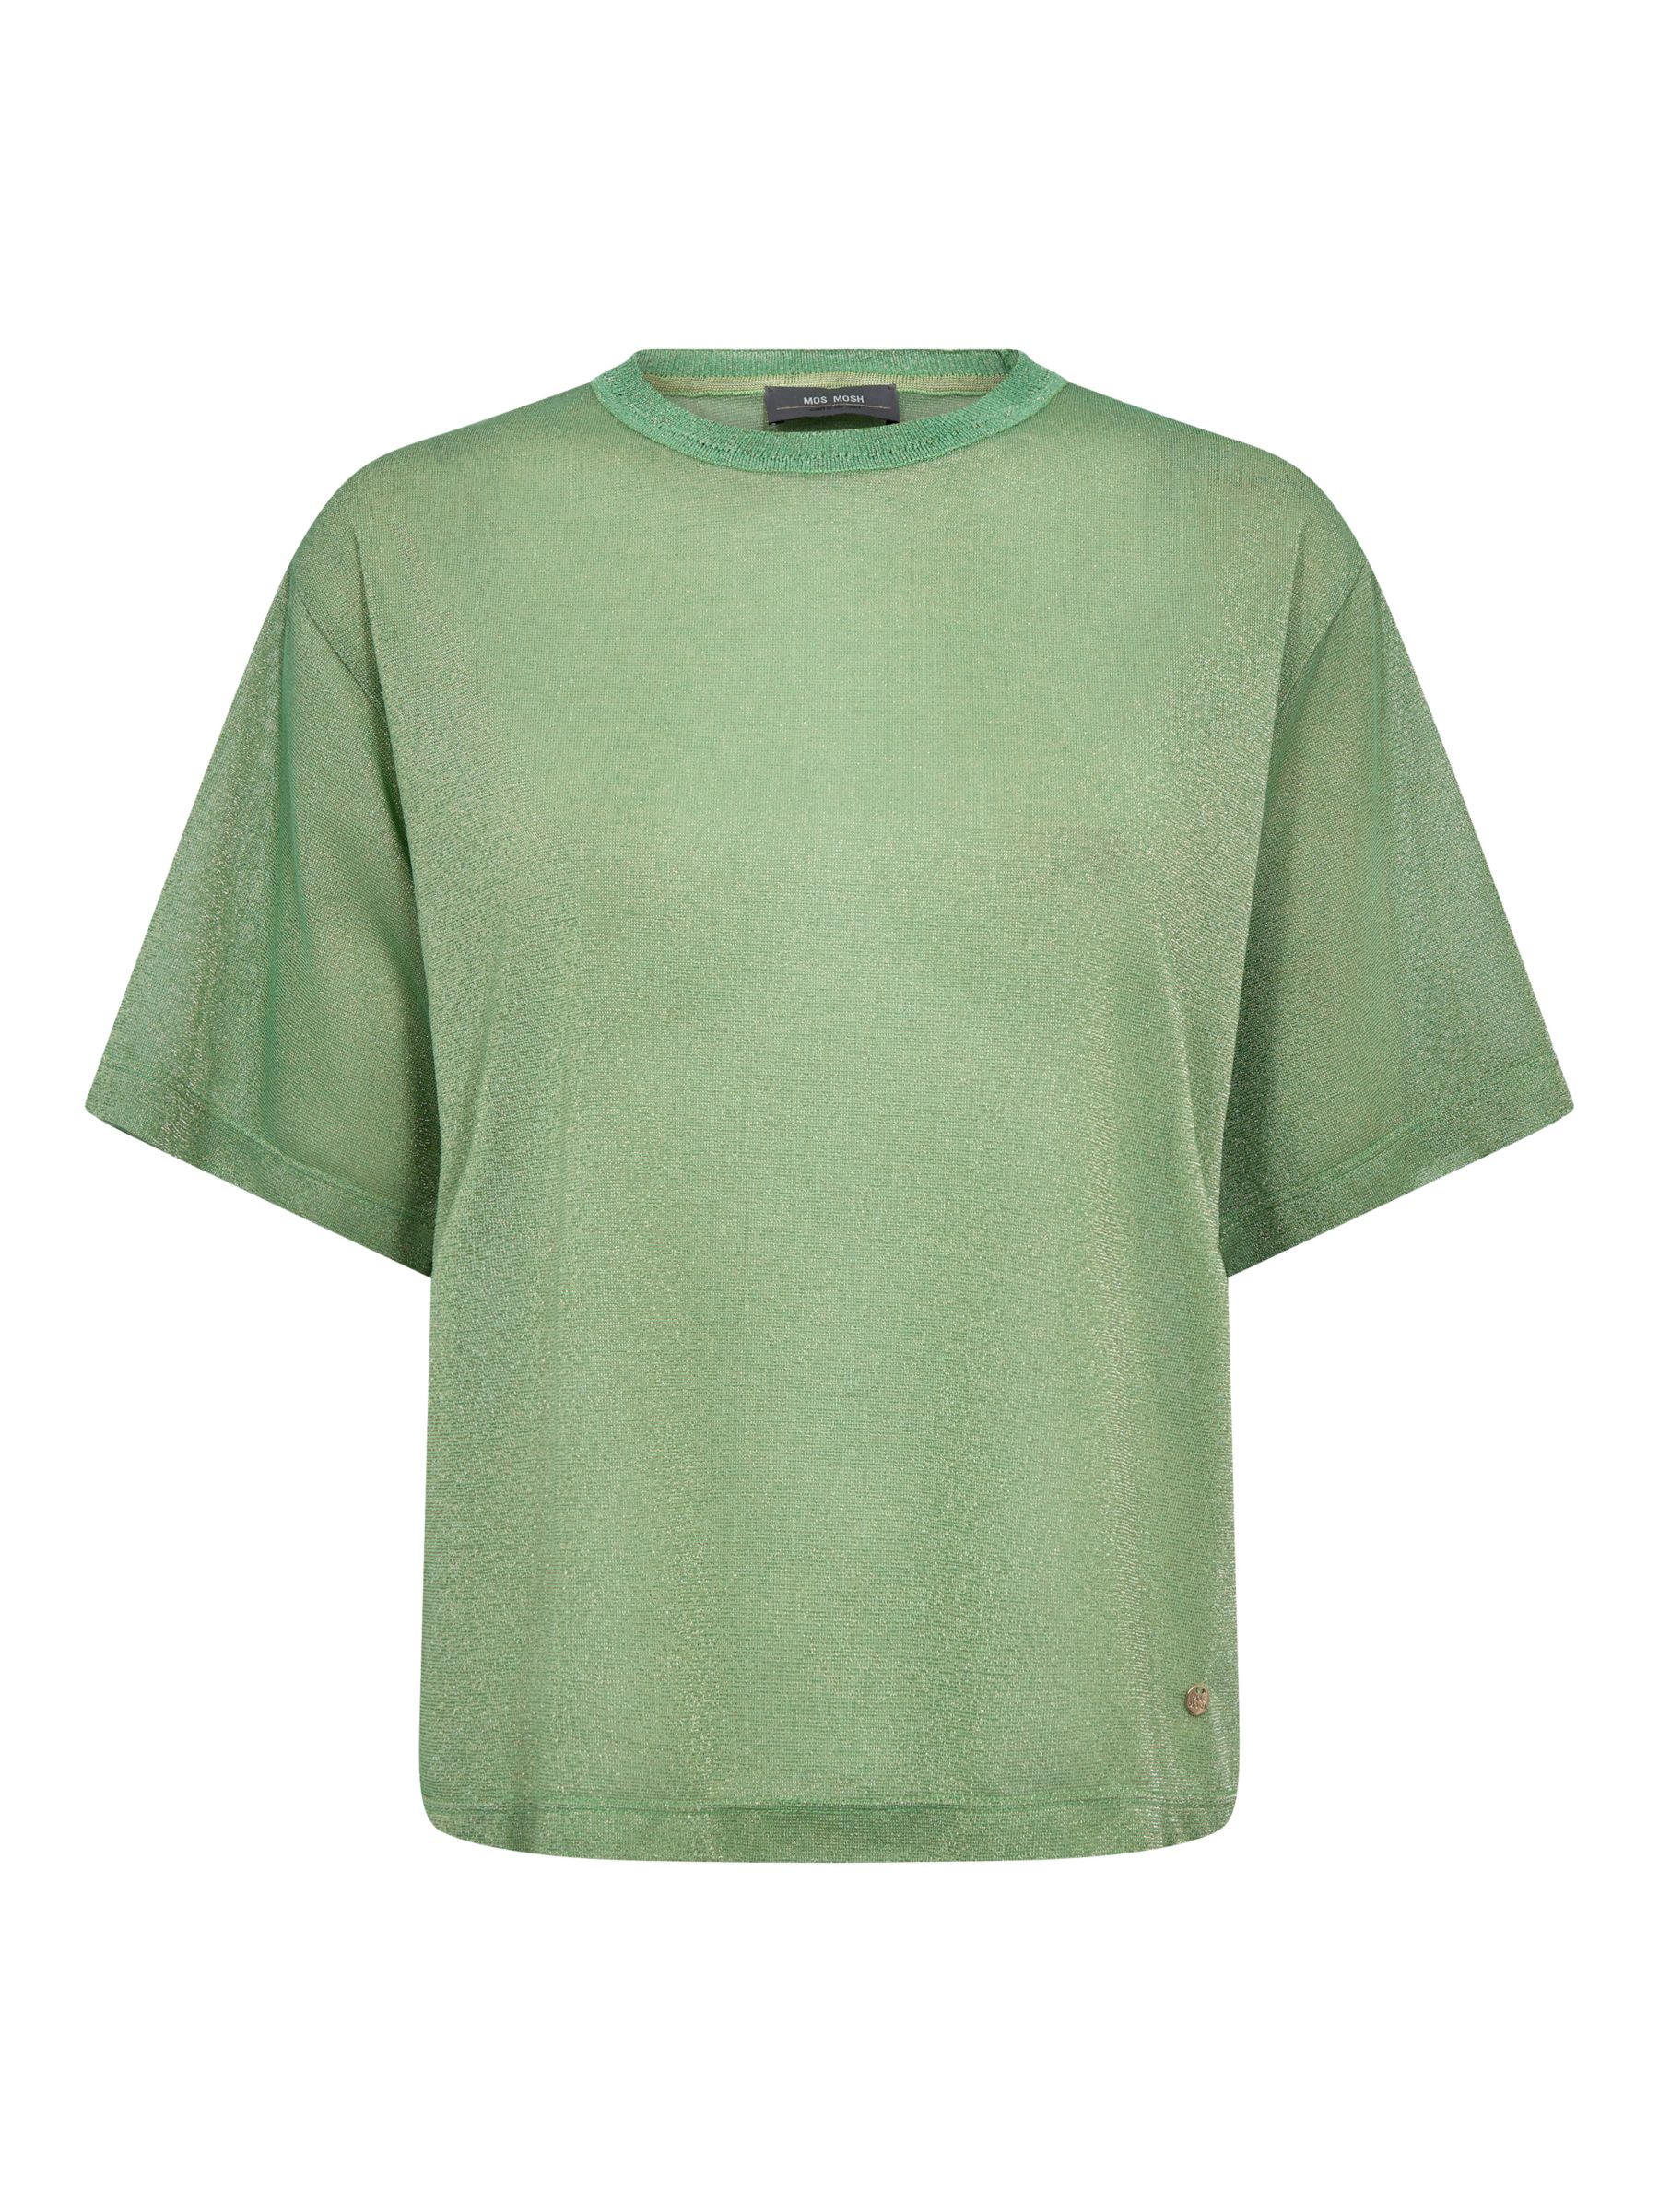 MOS MOSH Kit Metallic T-Shirt, Zephyr Green at John Lewis & Partners